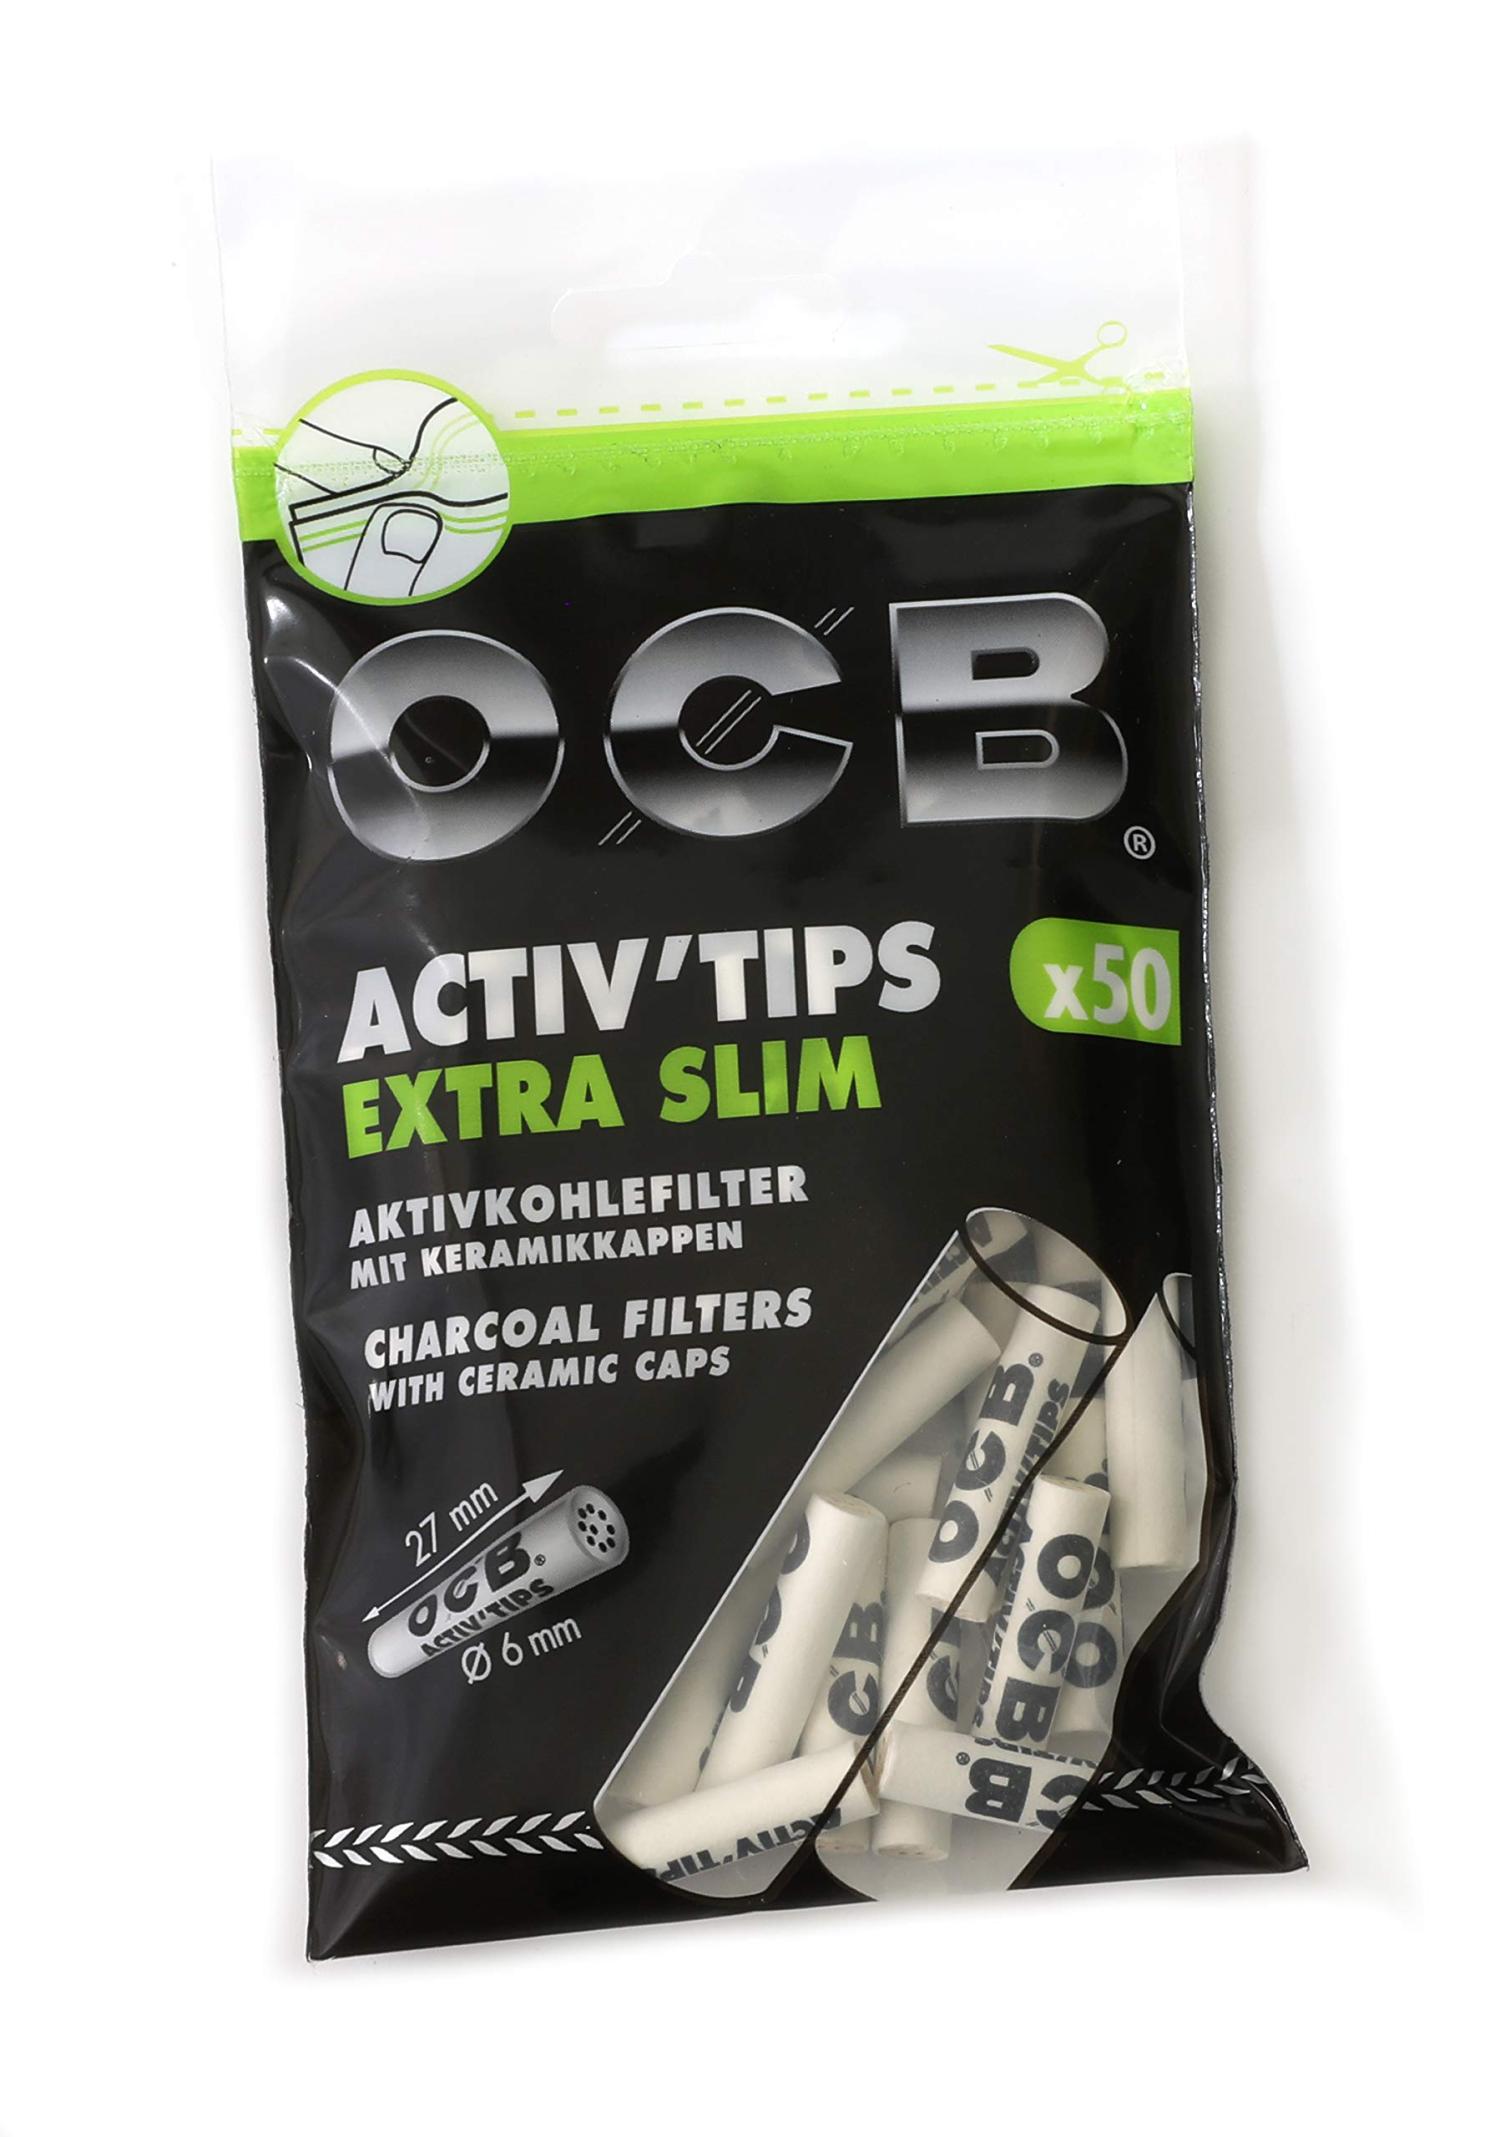 Filtres Activ' Tips Slim OCB x 1 - 2,50€